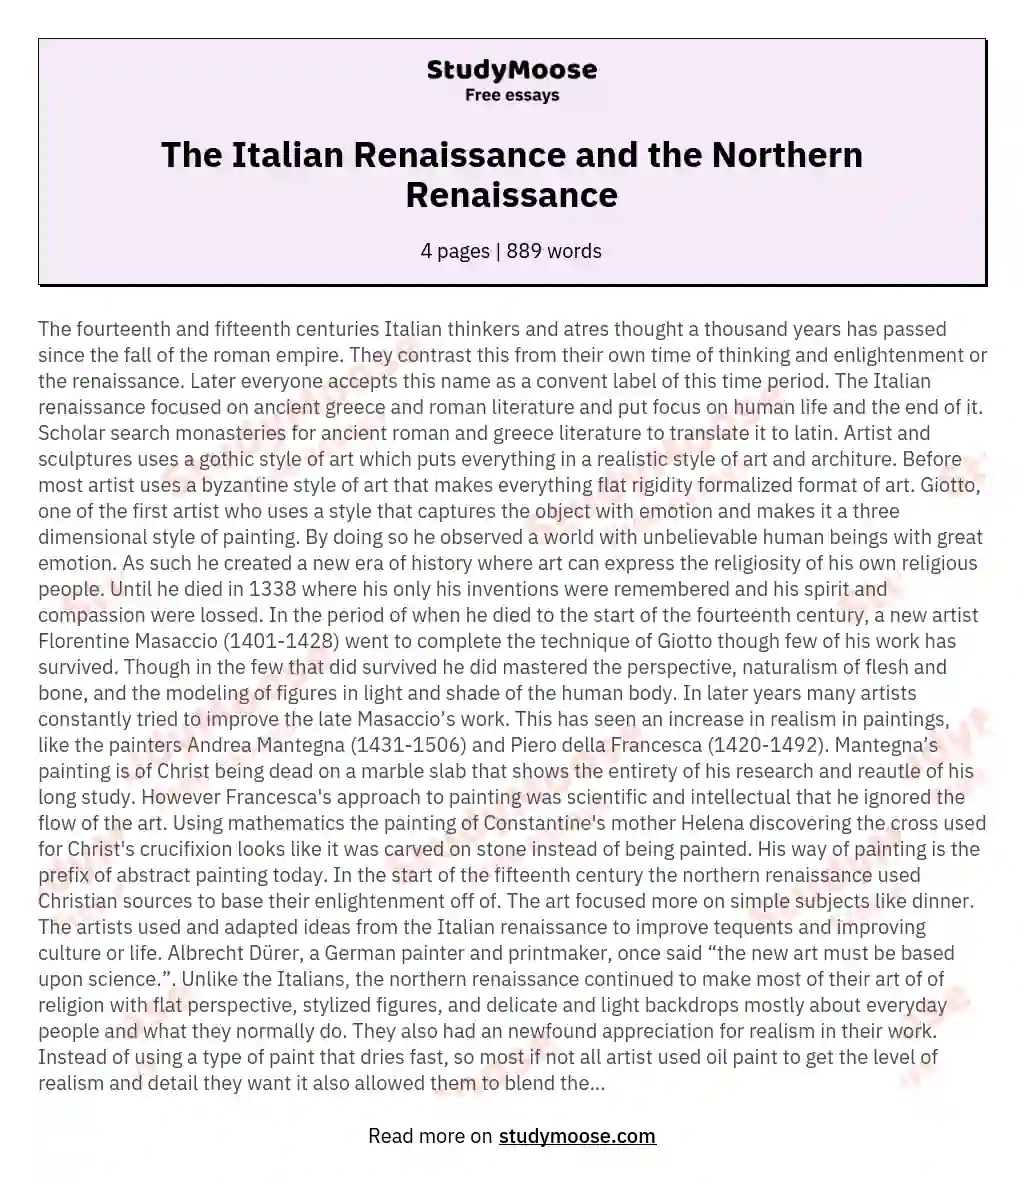 The Italian Renaissance and the Northern Renaissance